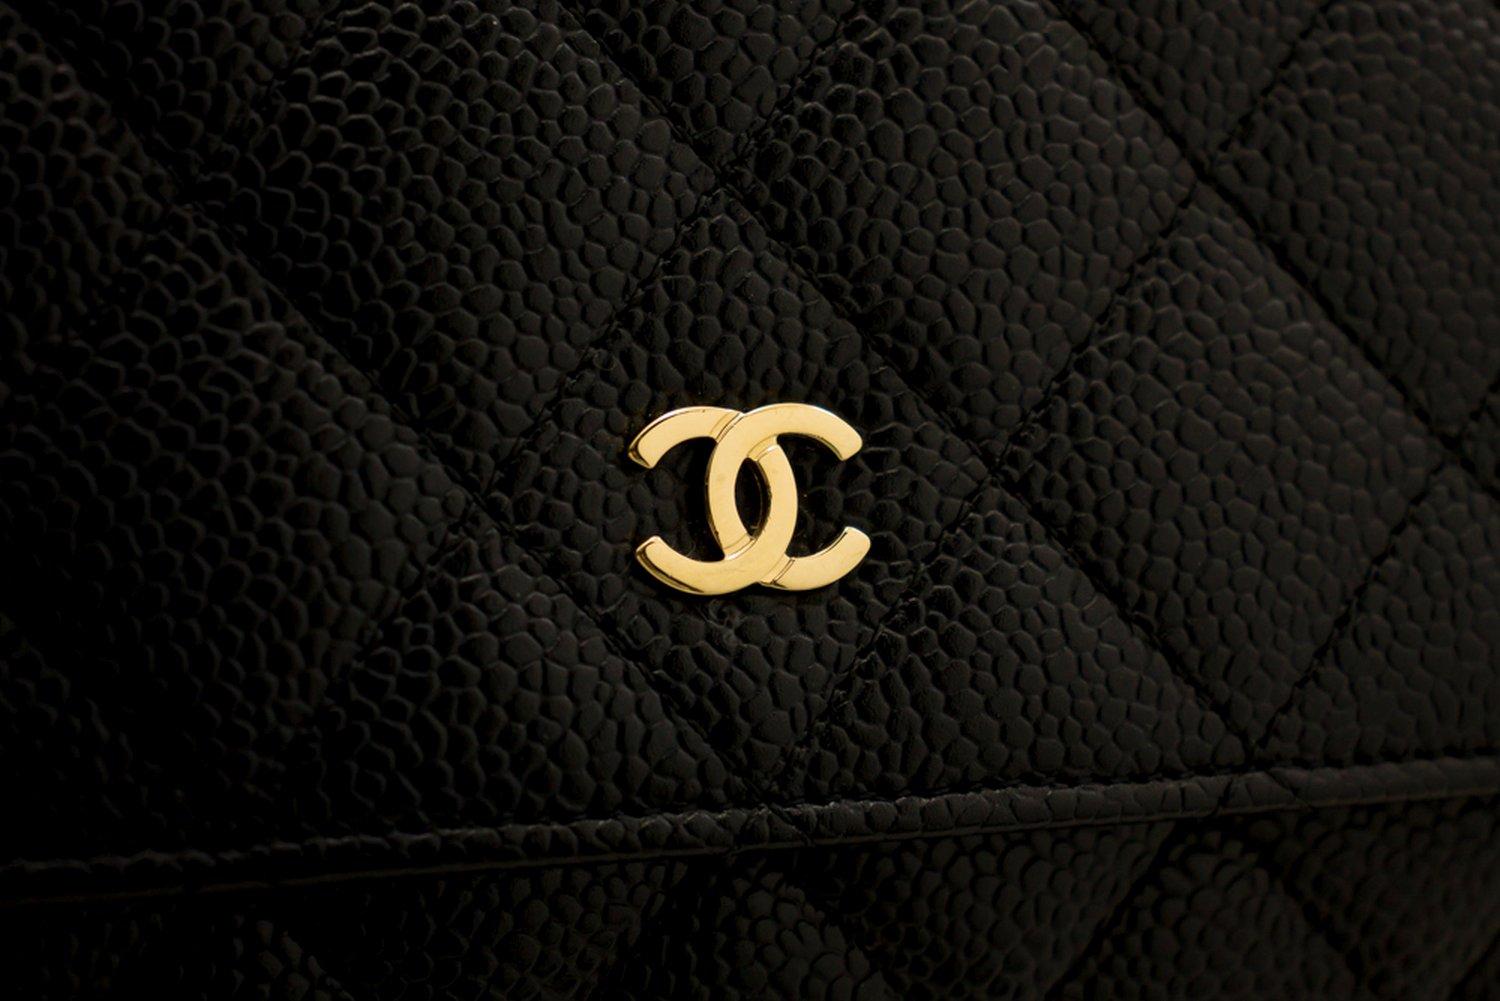 CHANEL Caviar WOC Wallet On Chain Black Shoulder Crossbody Bag 5